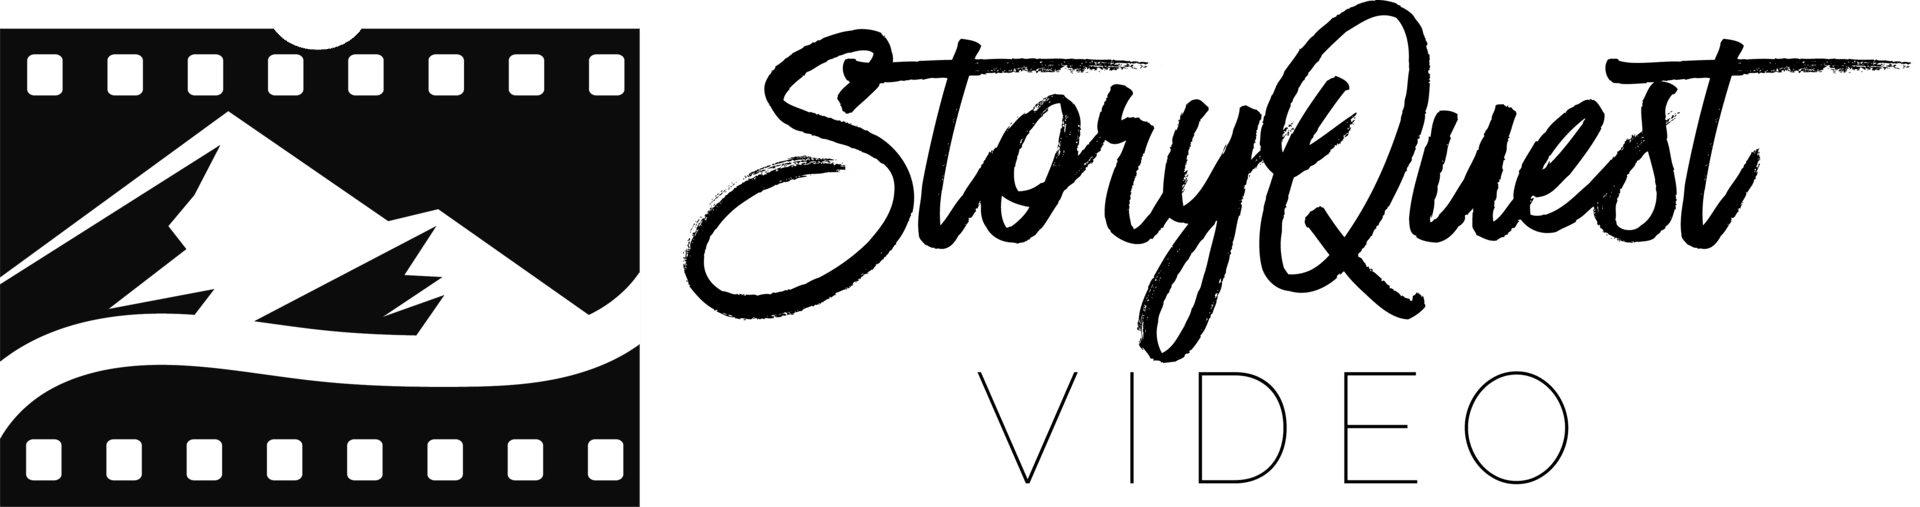 StoryQuest Video, LLC